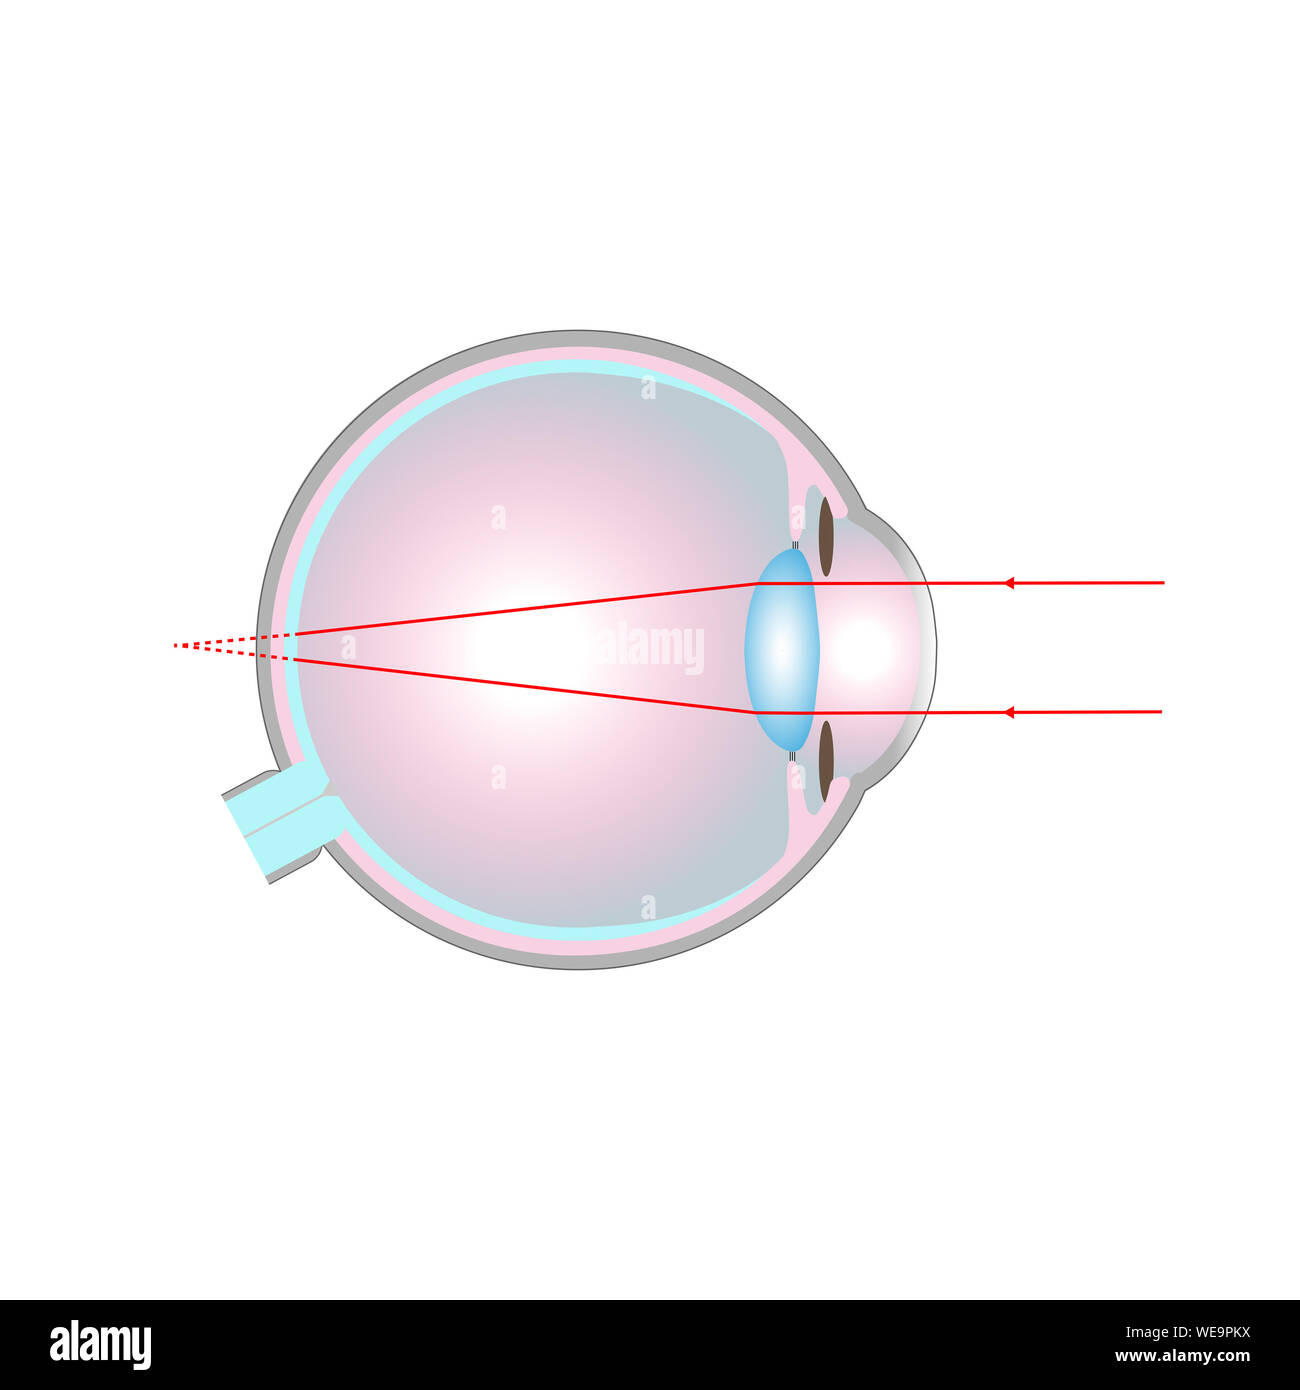 Vision disorder, illustration. Long-sightedness (hyperopia). Stock Photo